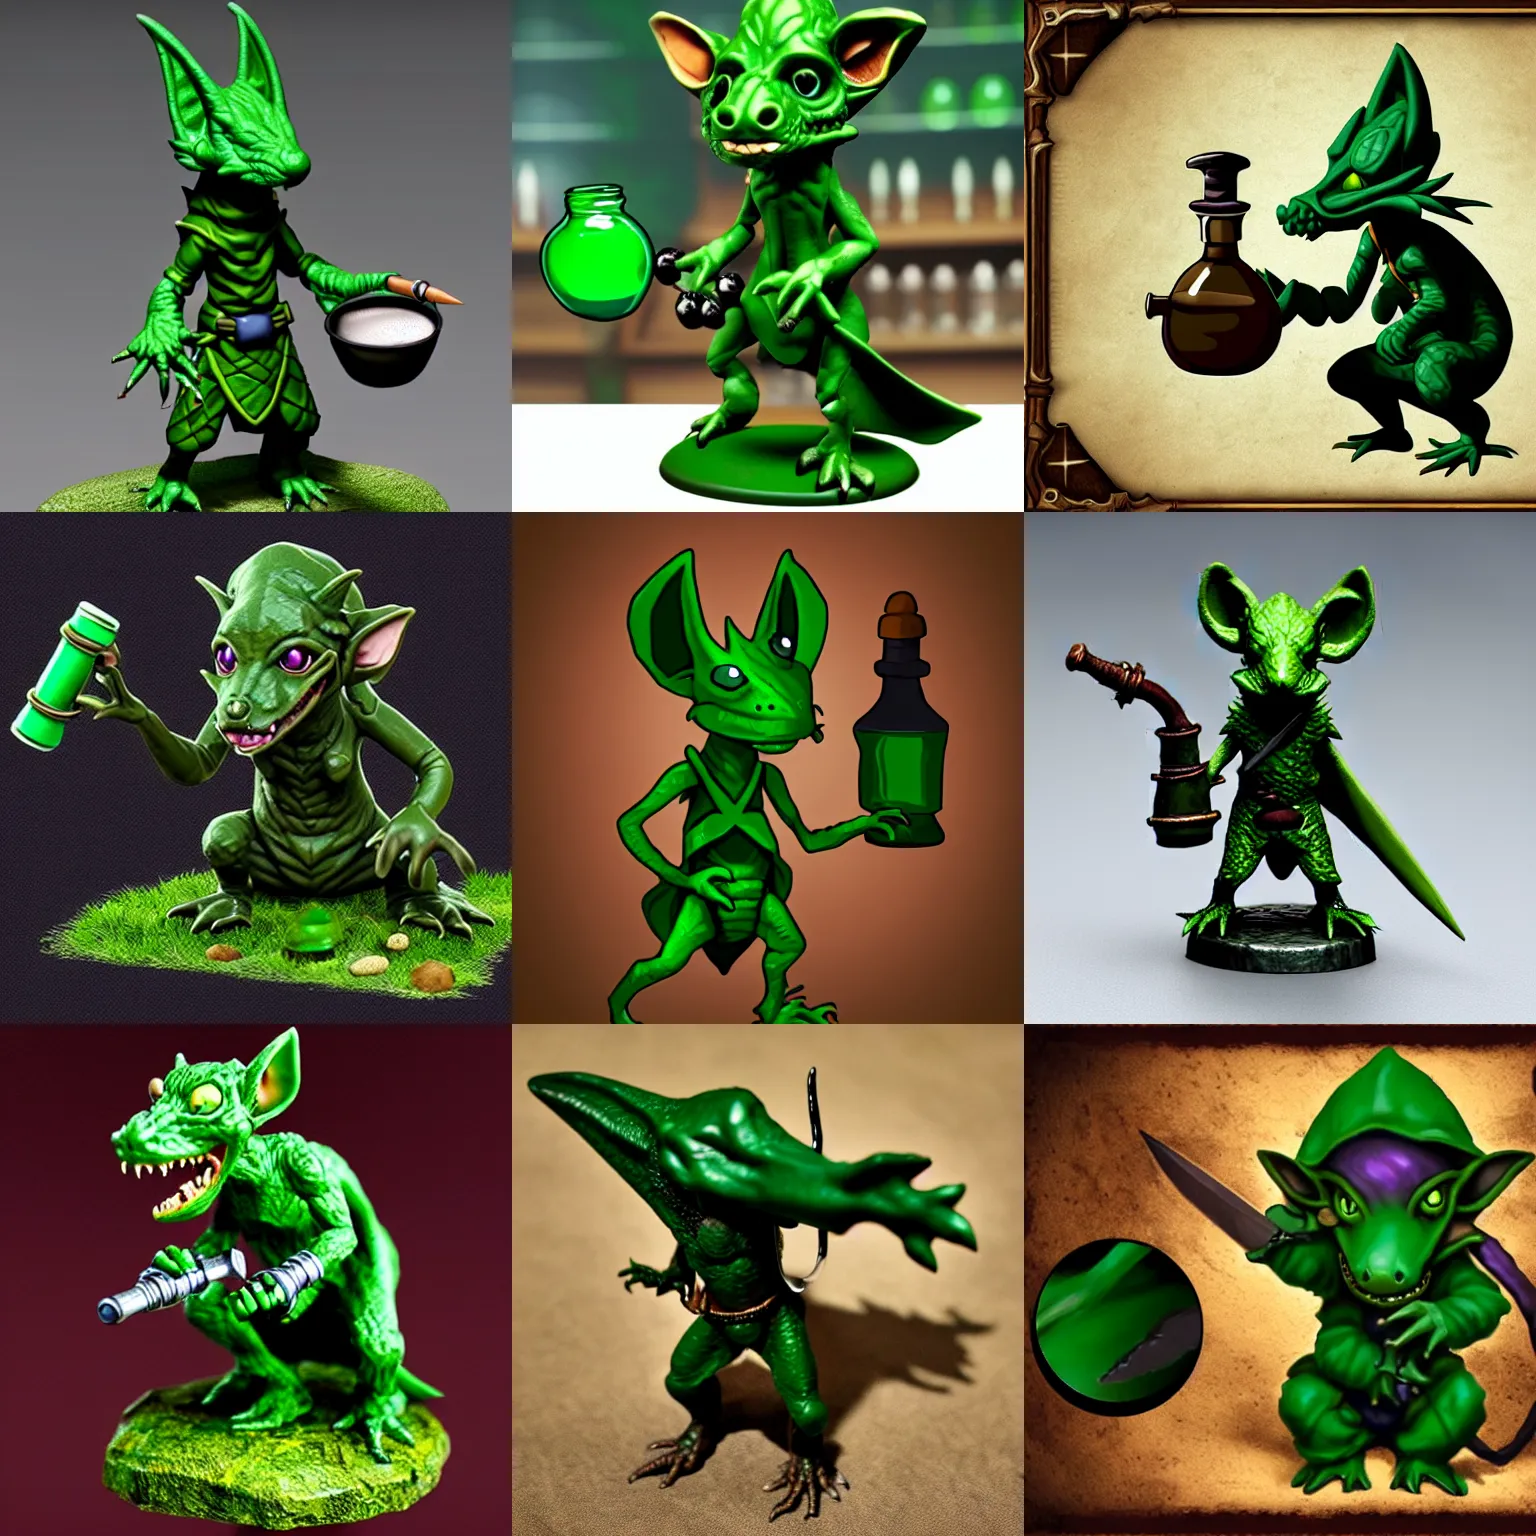 Prompt: dark green kobold alchemist preparing potions, very high quality, sharp, crisp, realistic, photorealistic